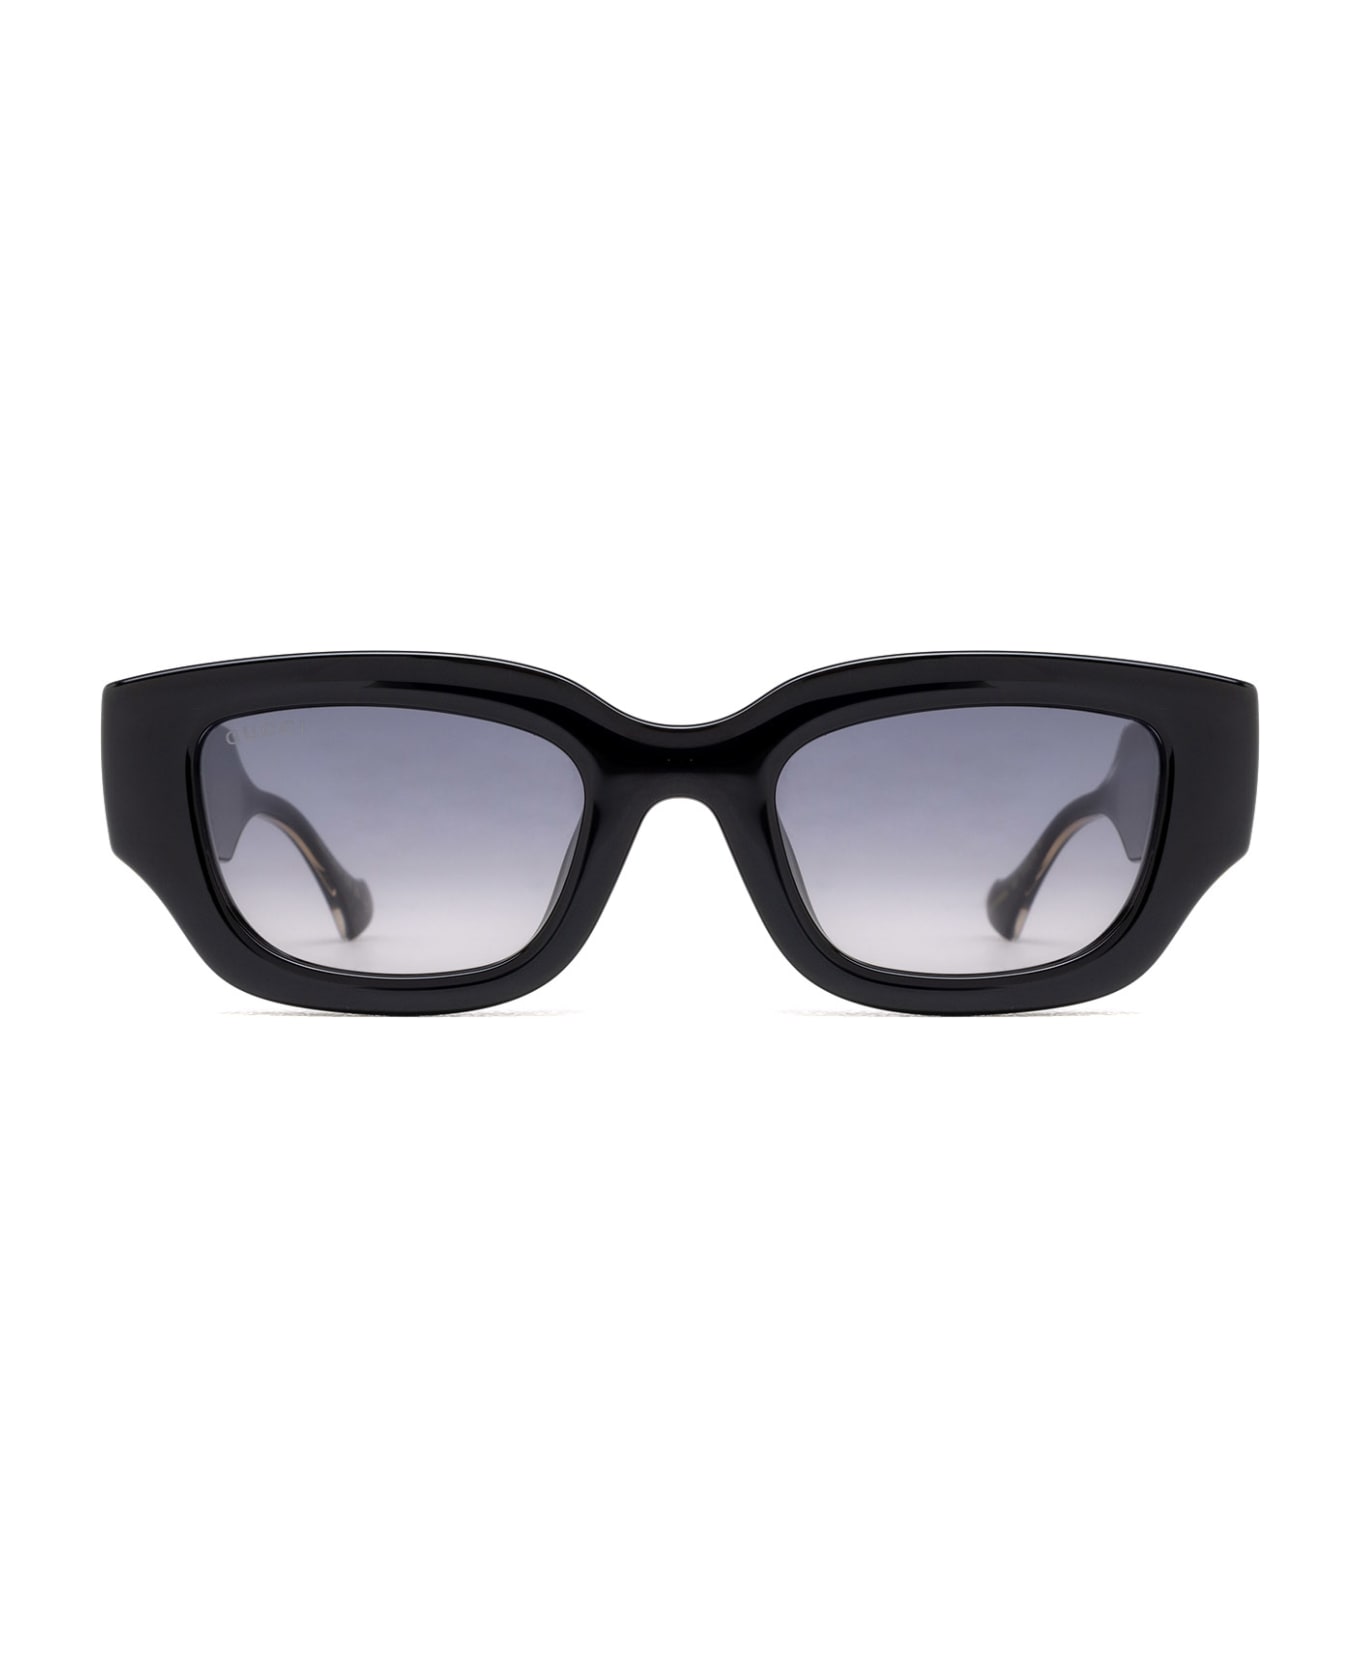 Gucci Eyewear Gg1558sk Black Sunglasses - Black